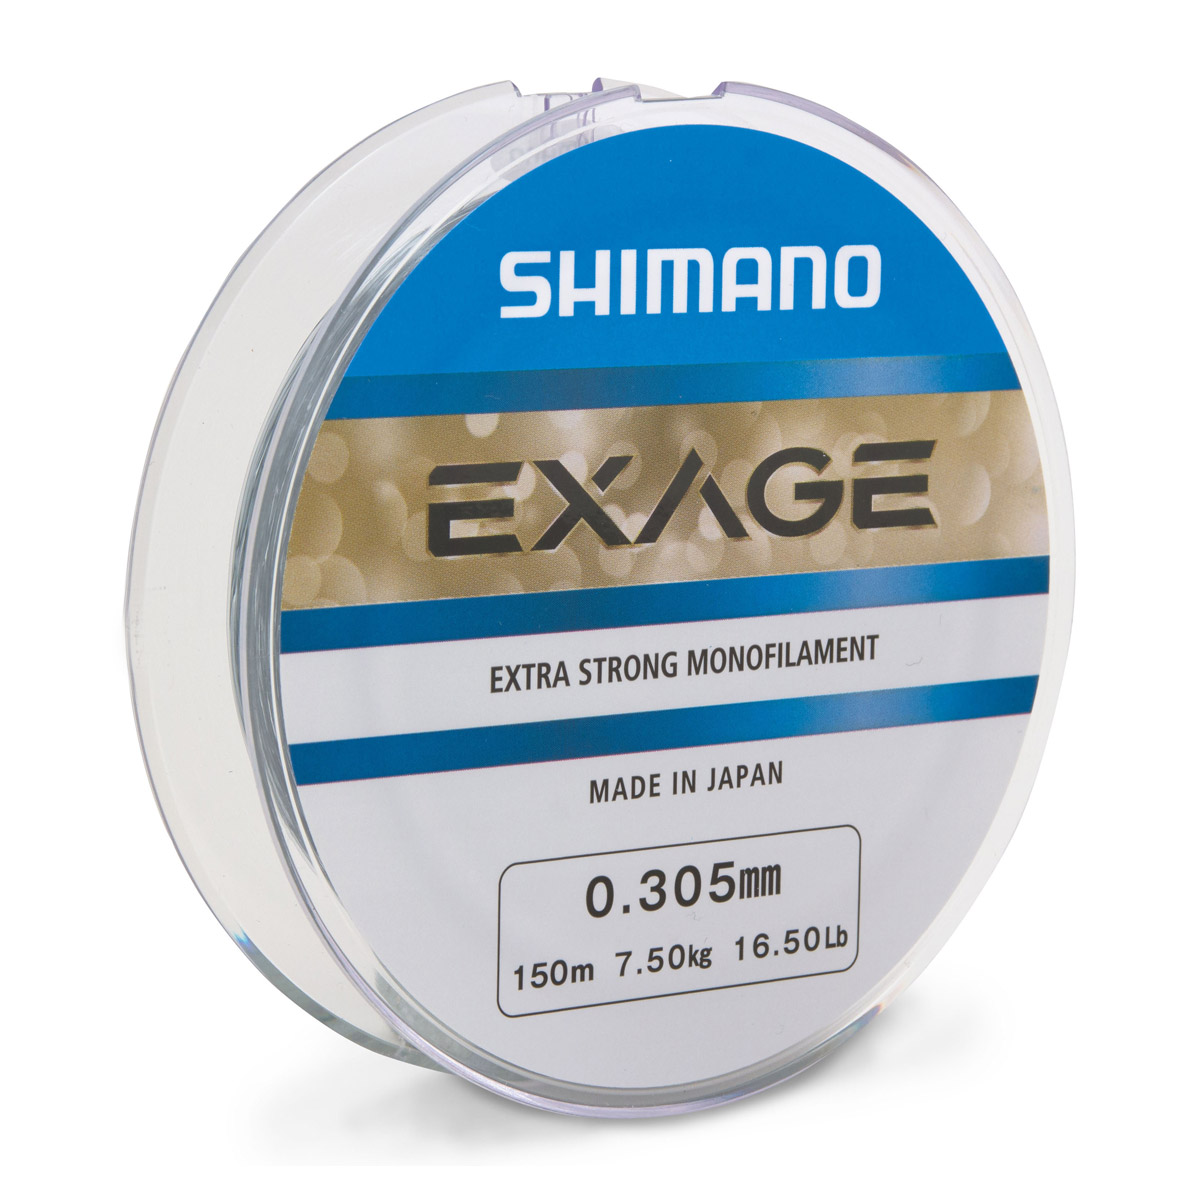 Shimano Exage Nylon New -  0.405 mm -  0.145  mm -  0.185  mm -  0.305 mm -  0.355 mm -  0.165  mm -  0.205 mm -  0.125  mm -  0.225  mm -  0.255  mm